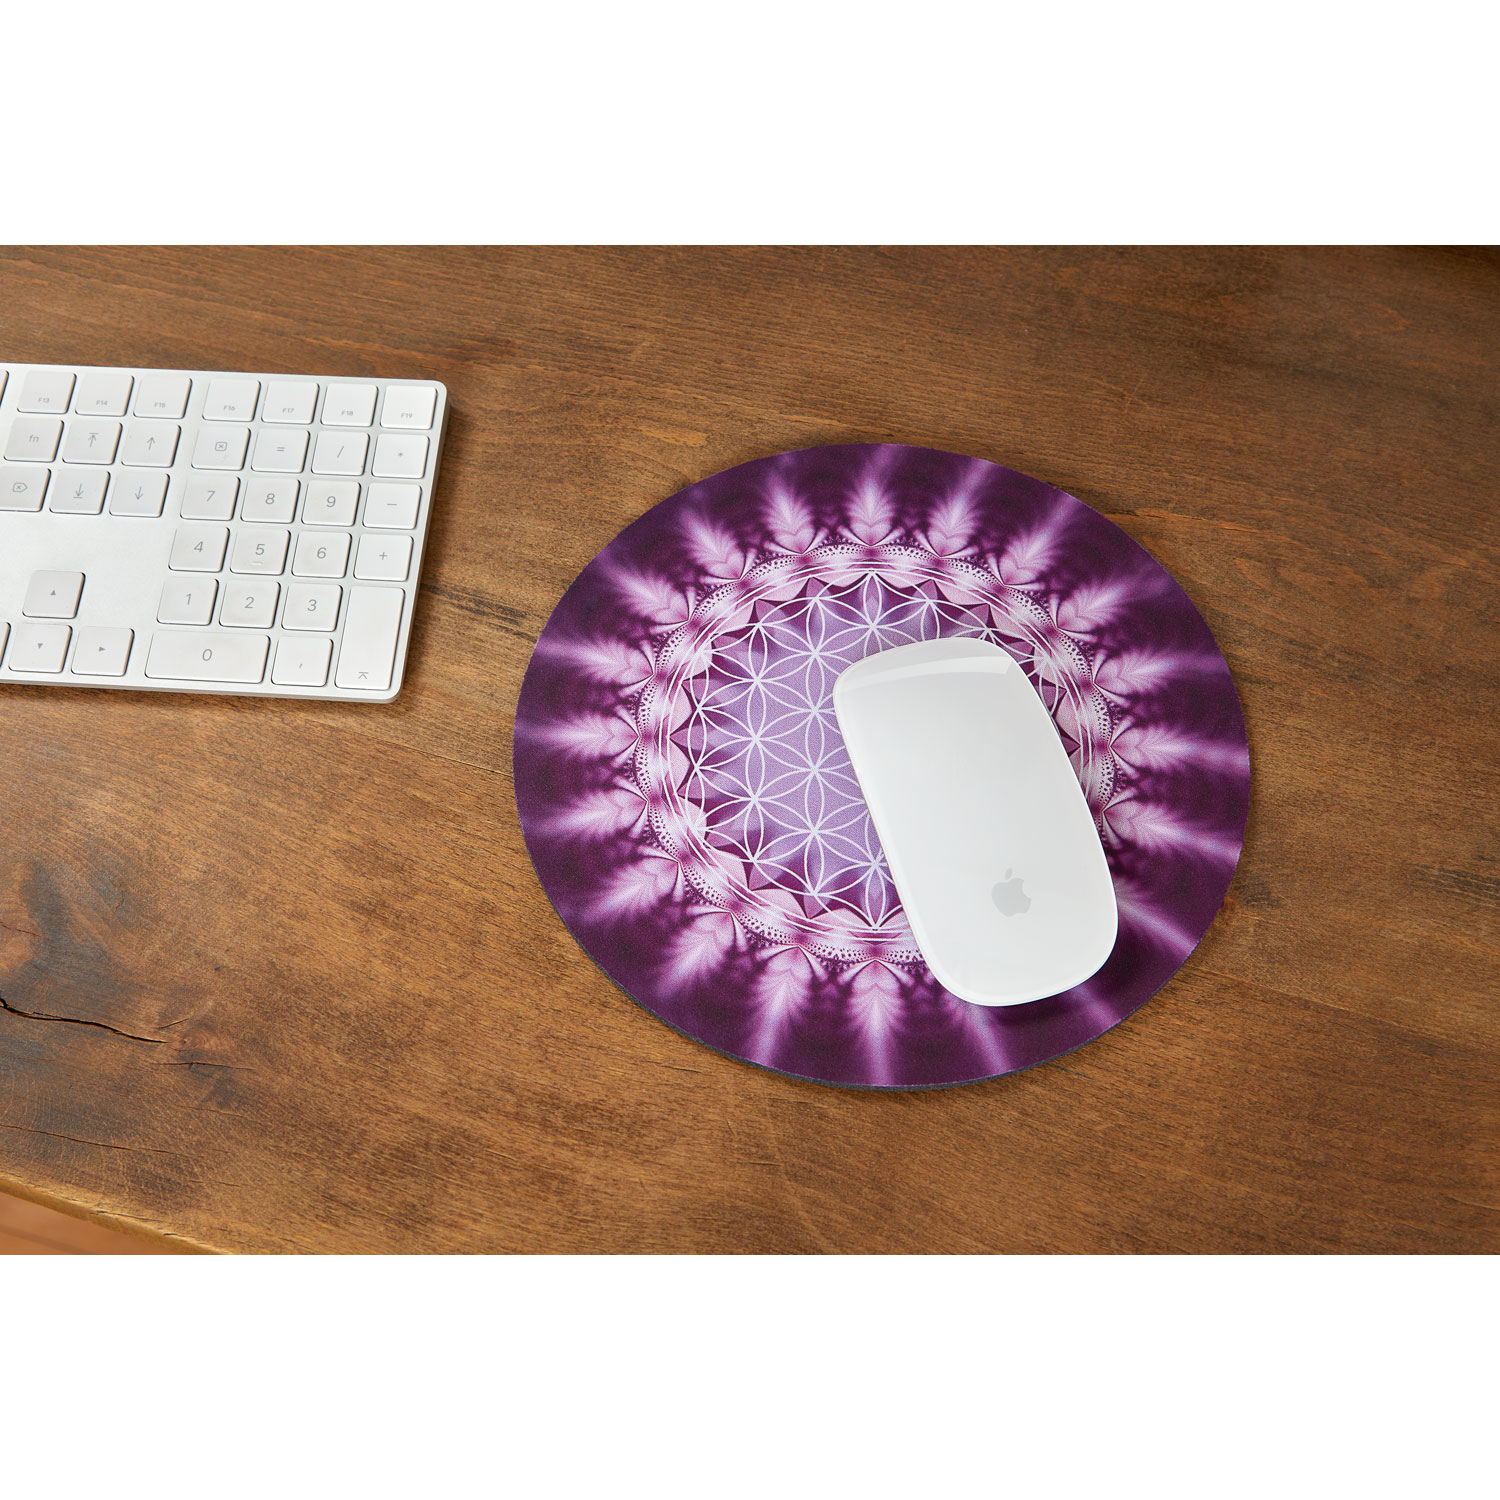 Mousepad „Pulsierende Blume des Lebens“, Produktbild 2